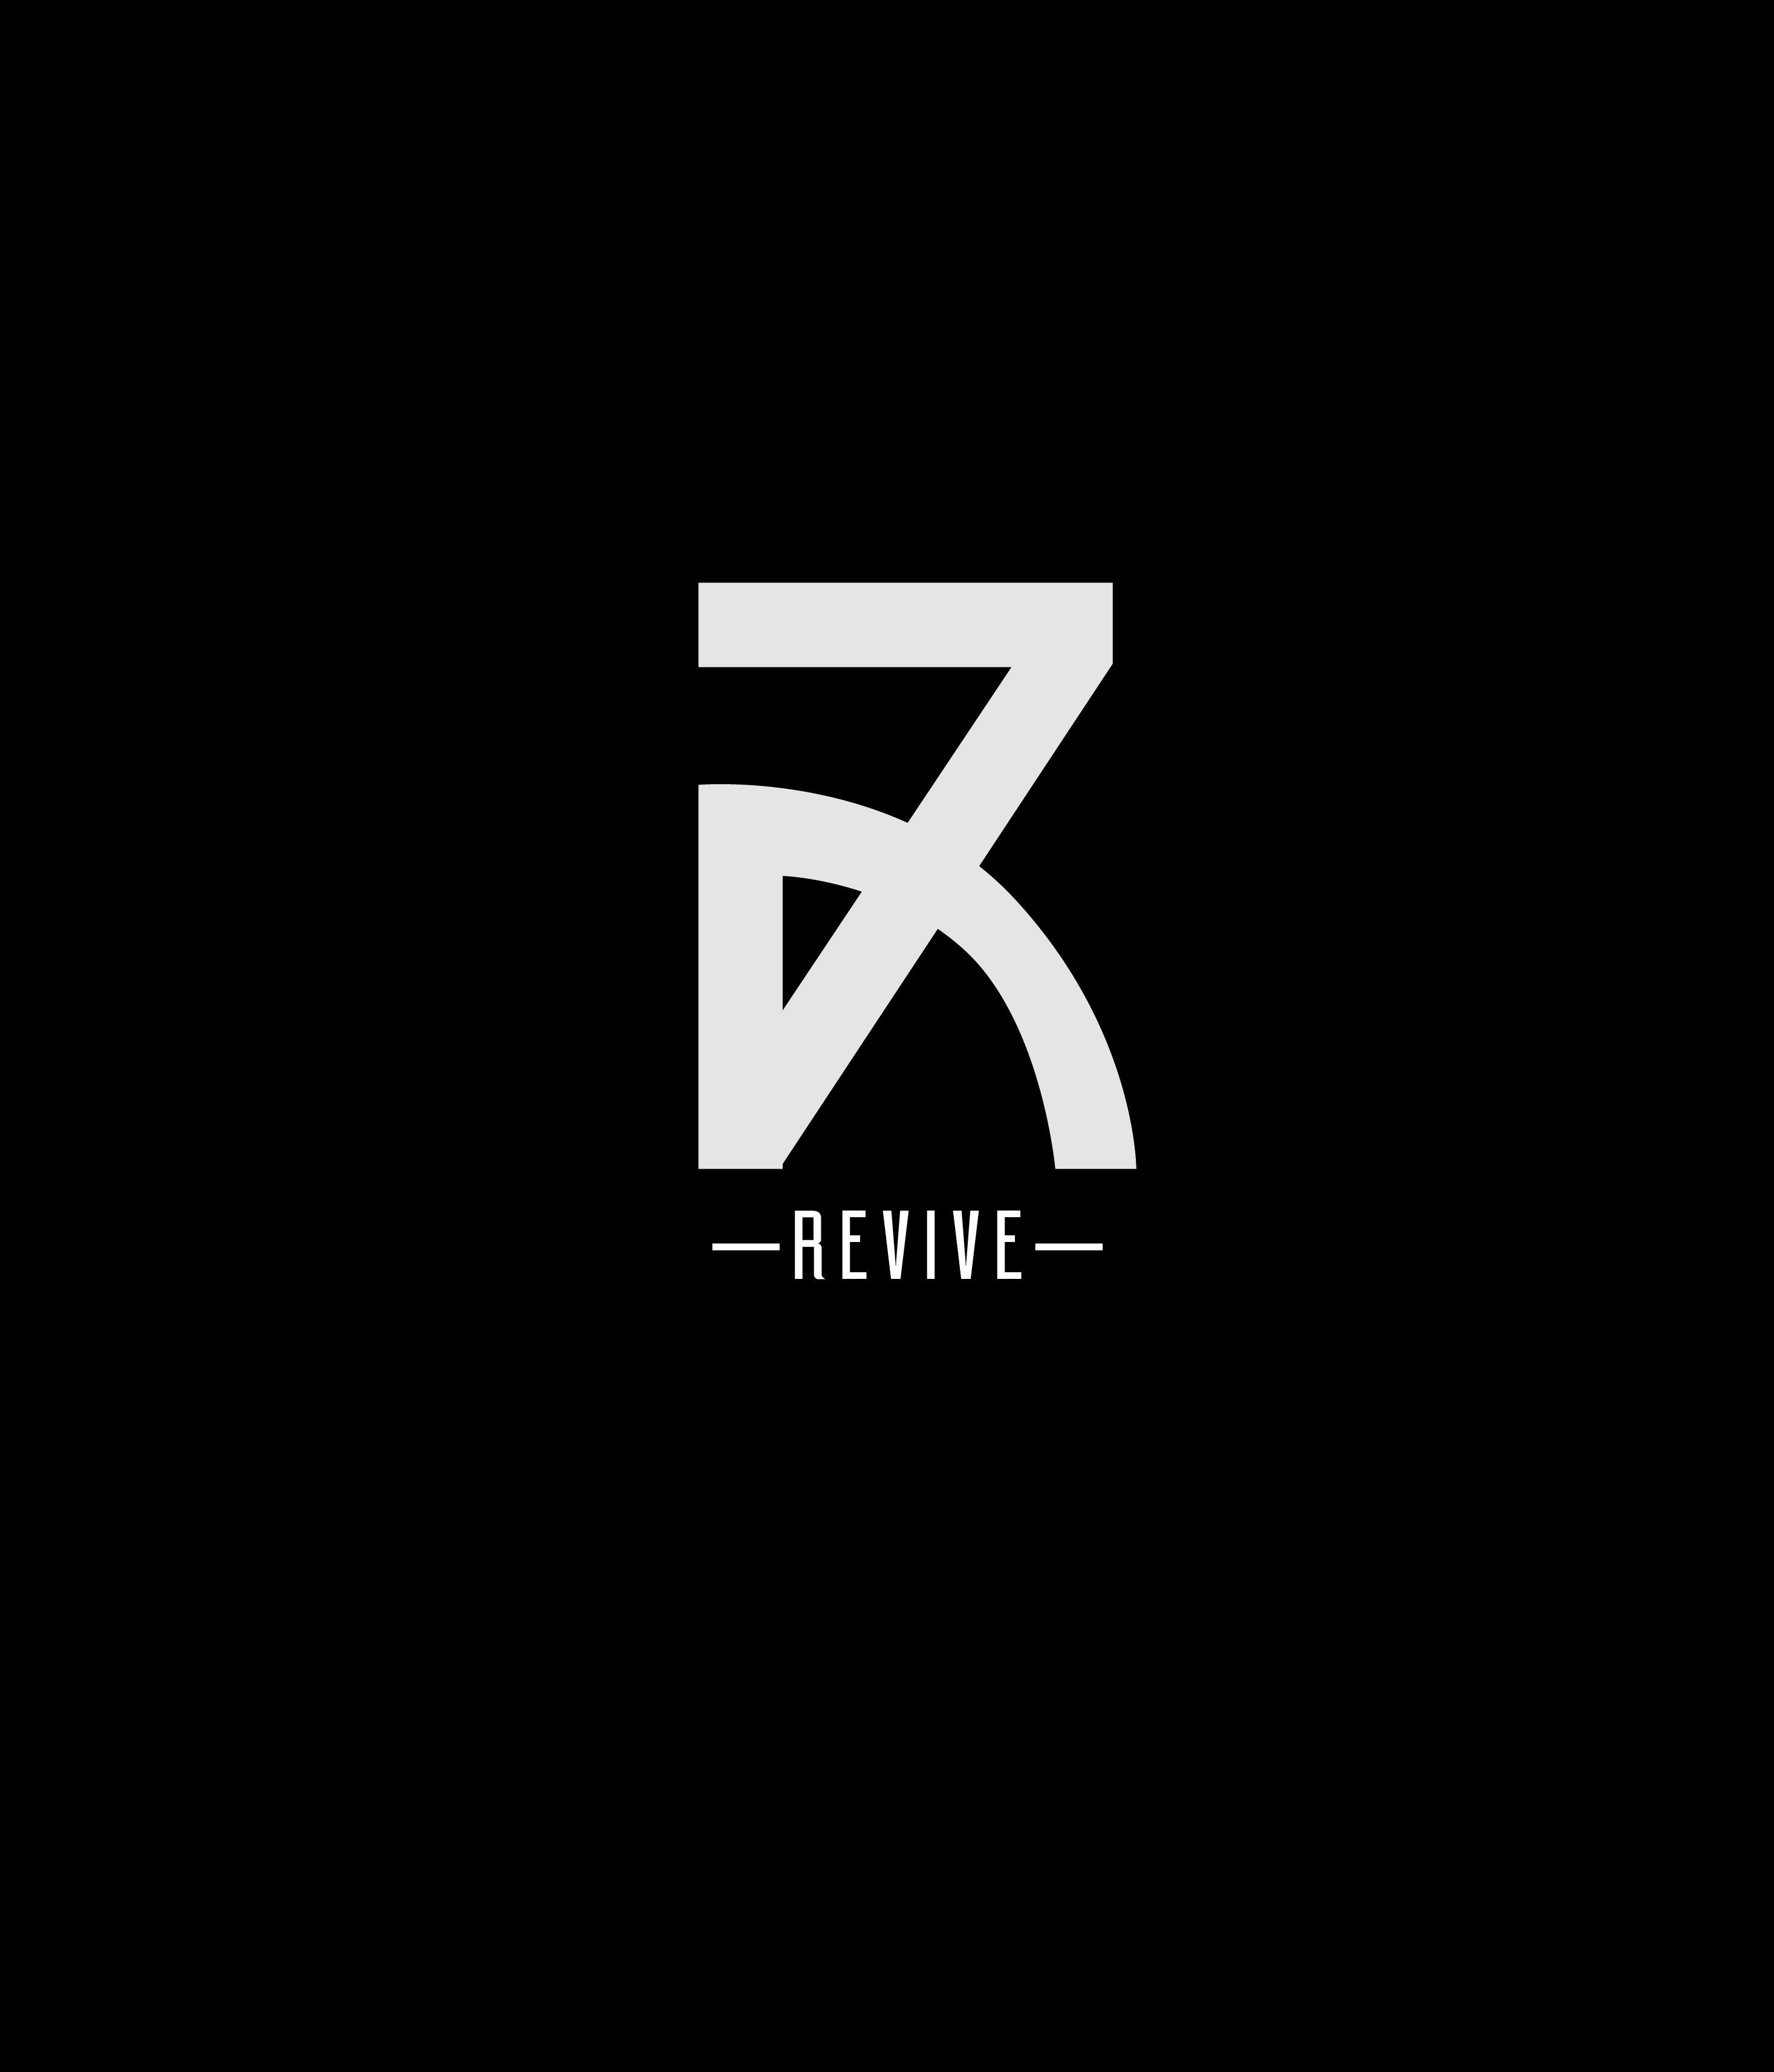 Revive Logo - Revive Logo 1. Bauer Branding